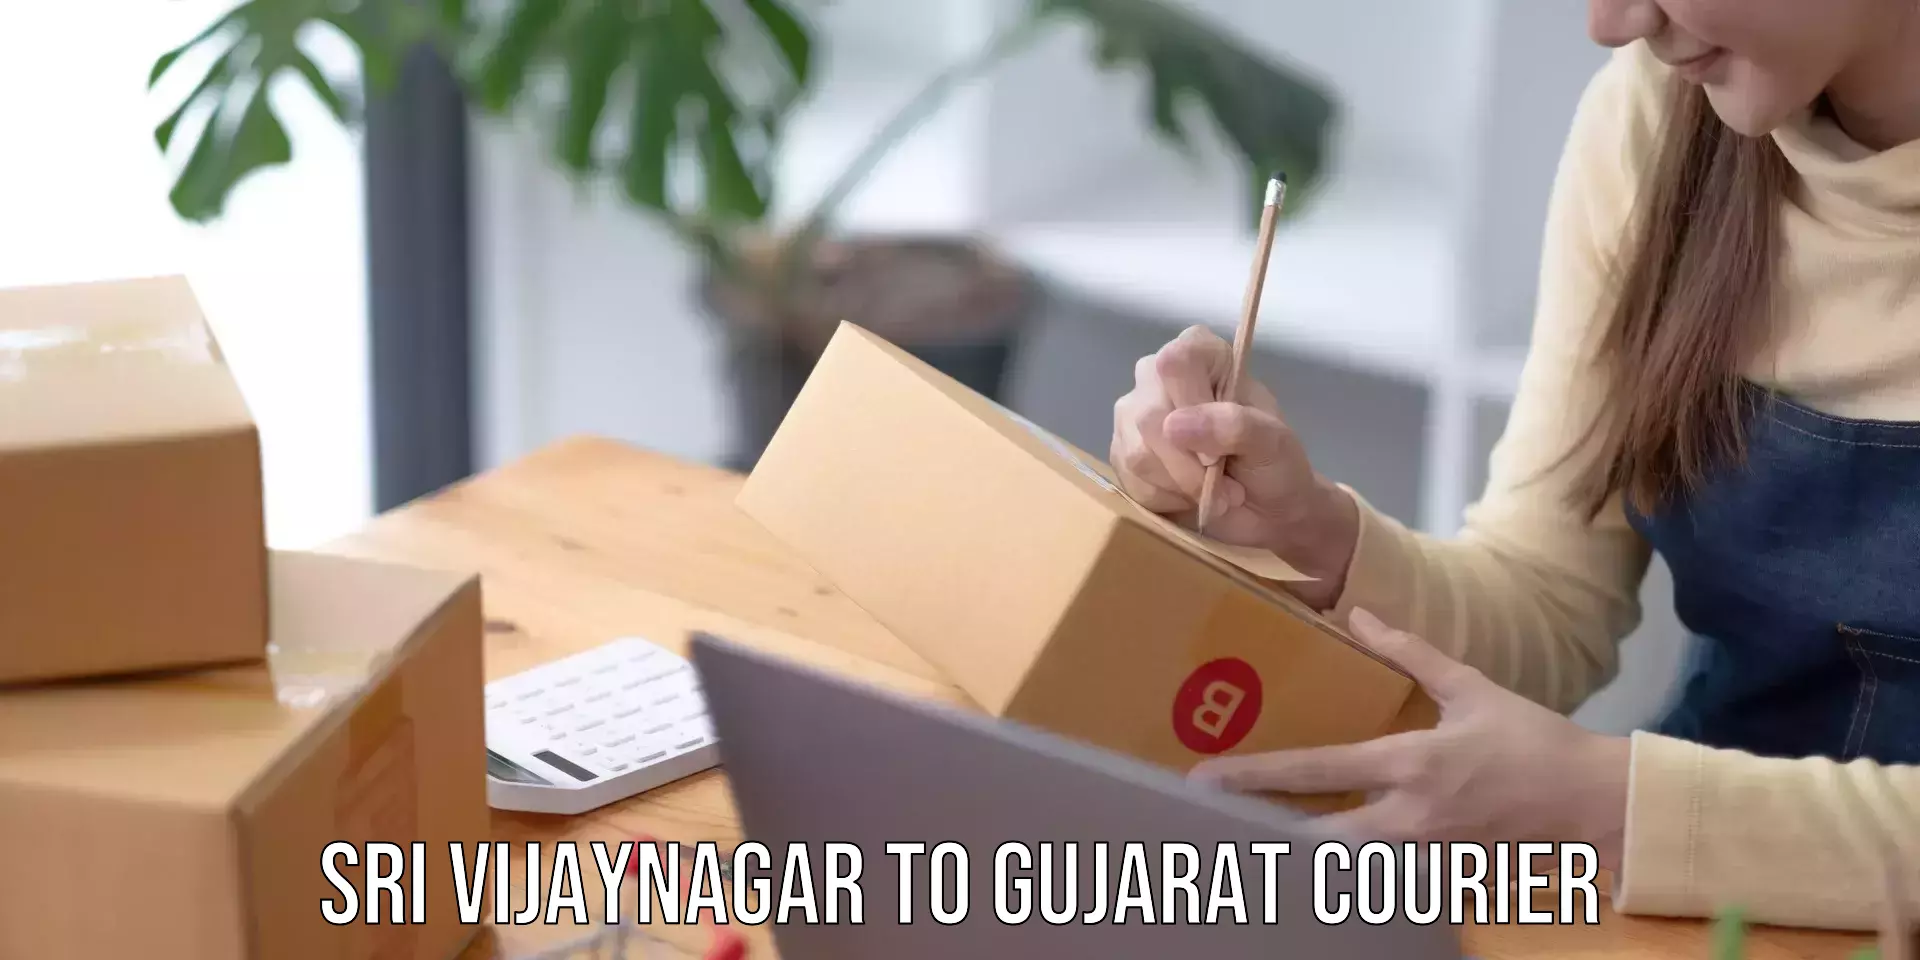 Advanced delivery network Sri Vijaynagar to Gujarat